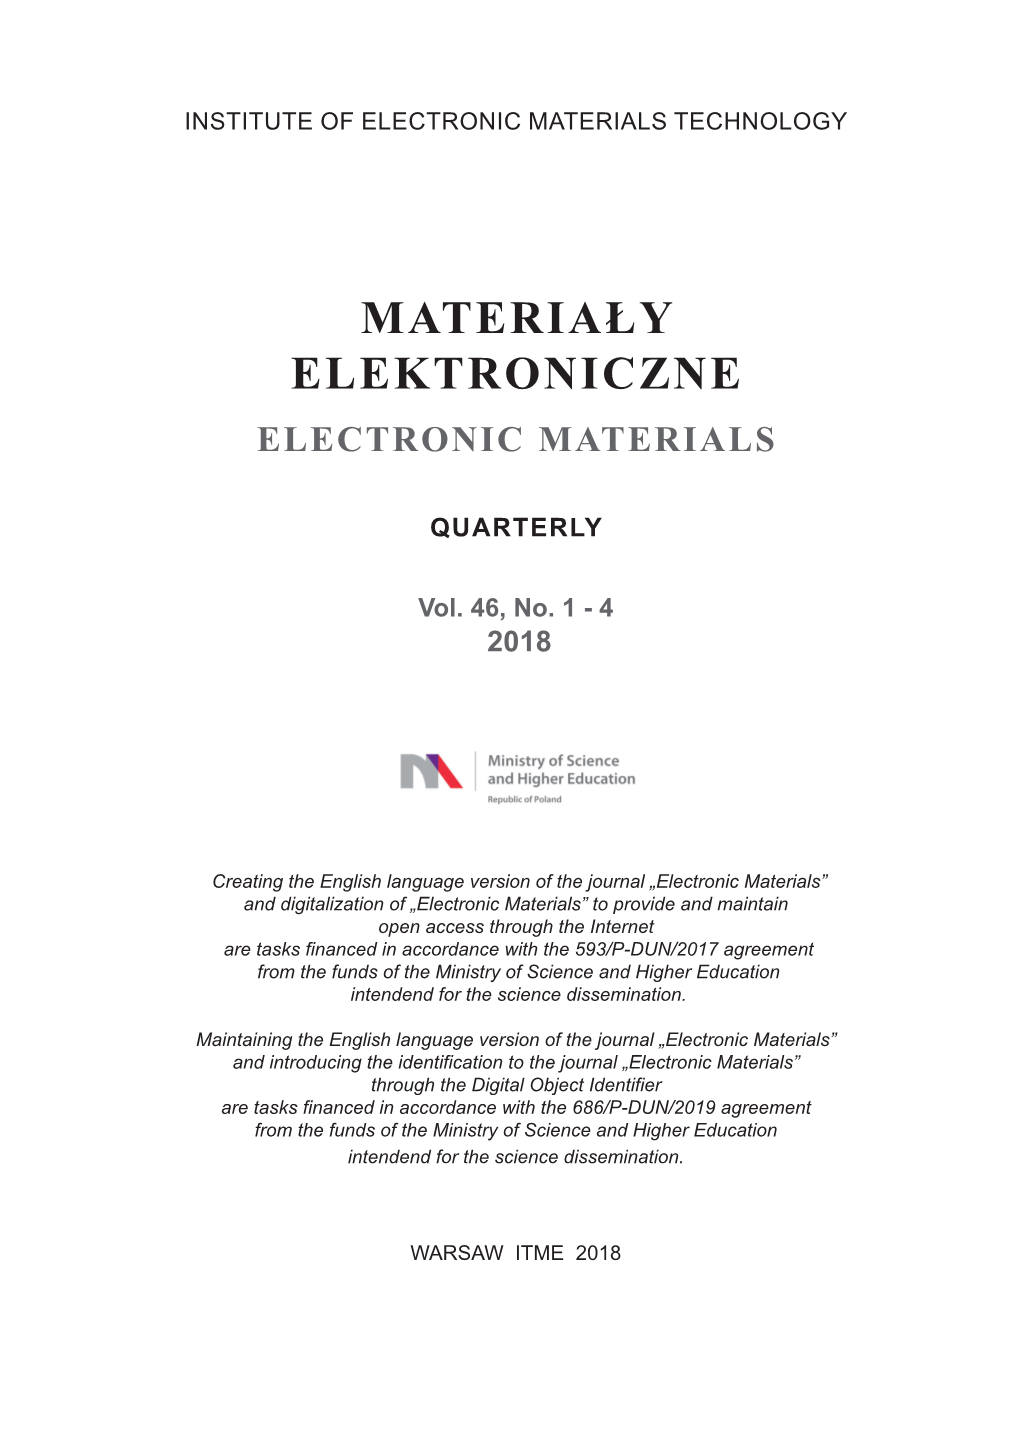 Materiały Elektroniczne Electronic Materials